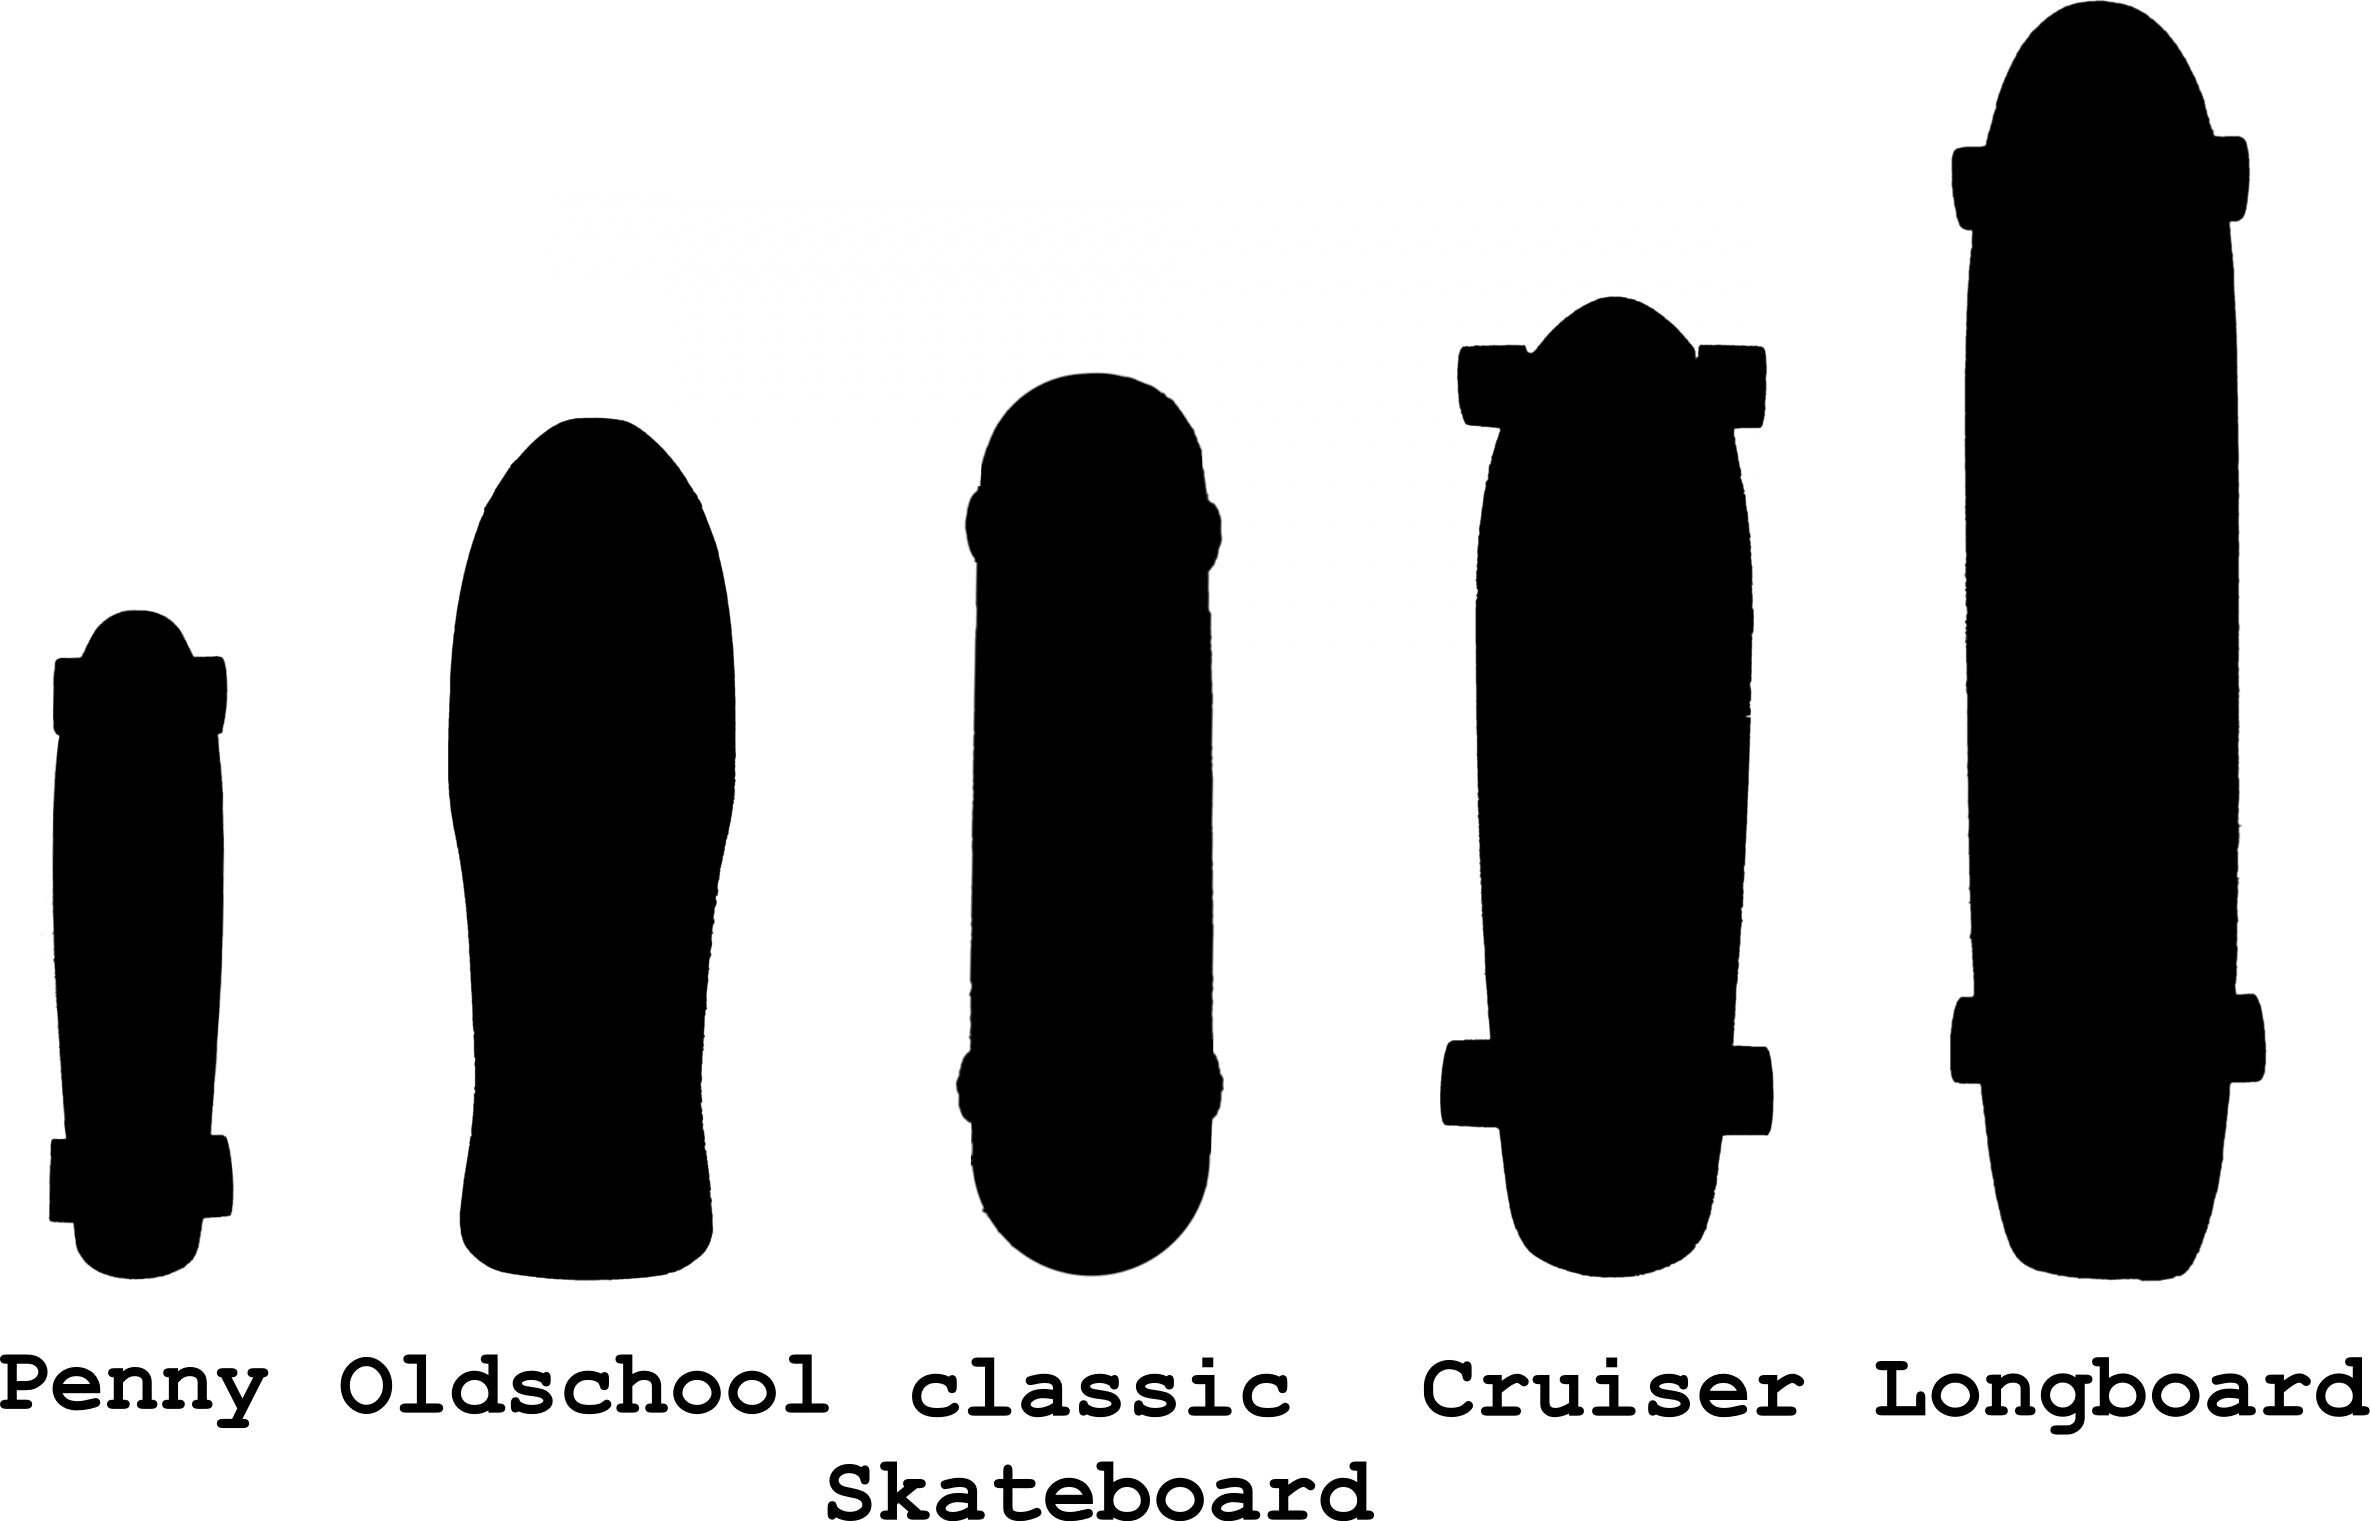 Penny, oldschool skateboard, classic skateboard, cruiser and longboard comparison